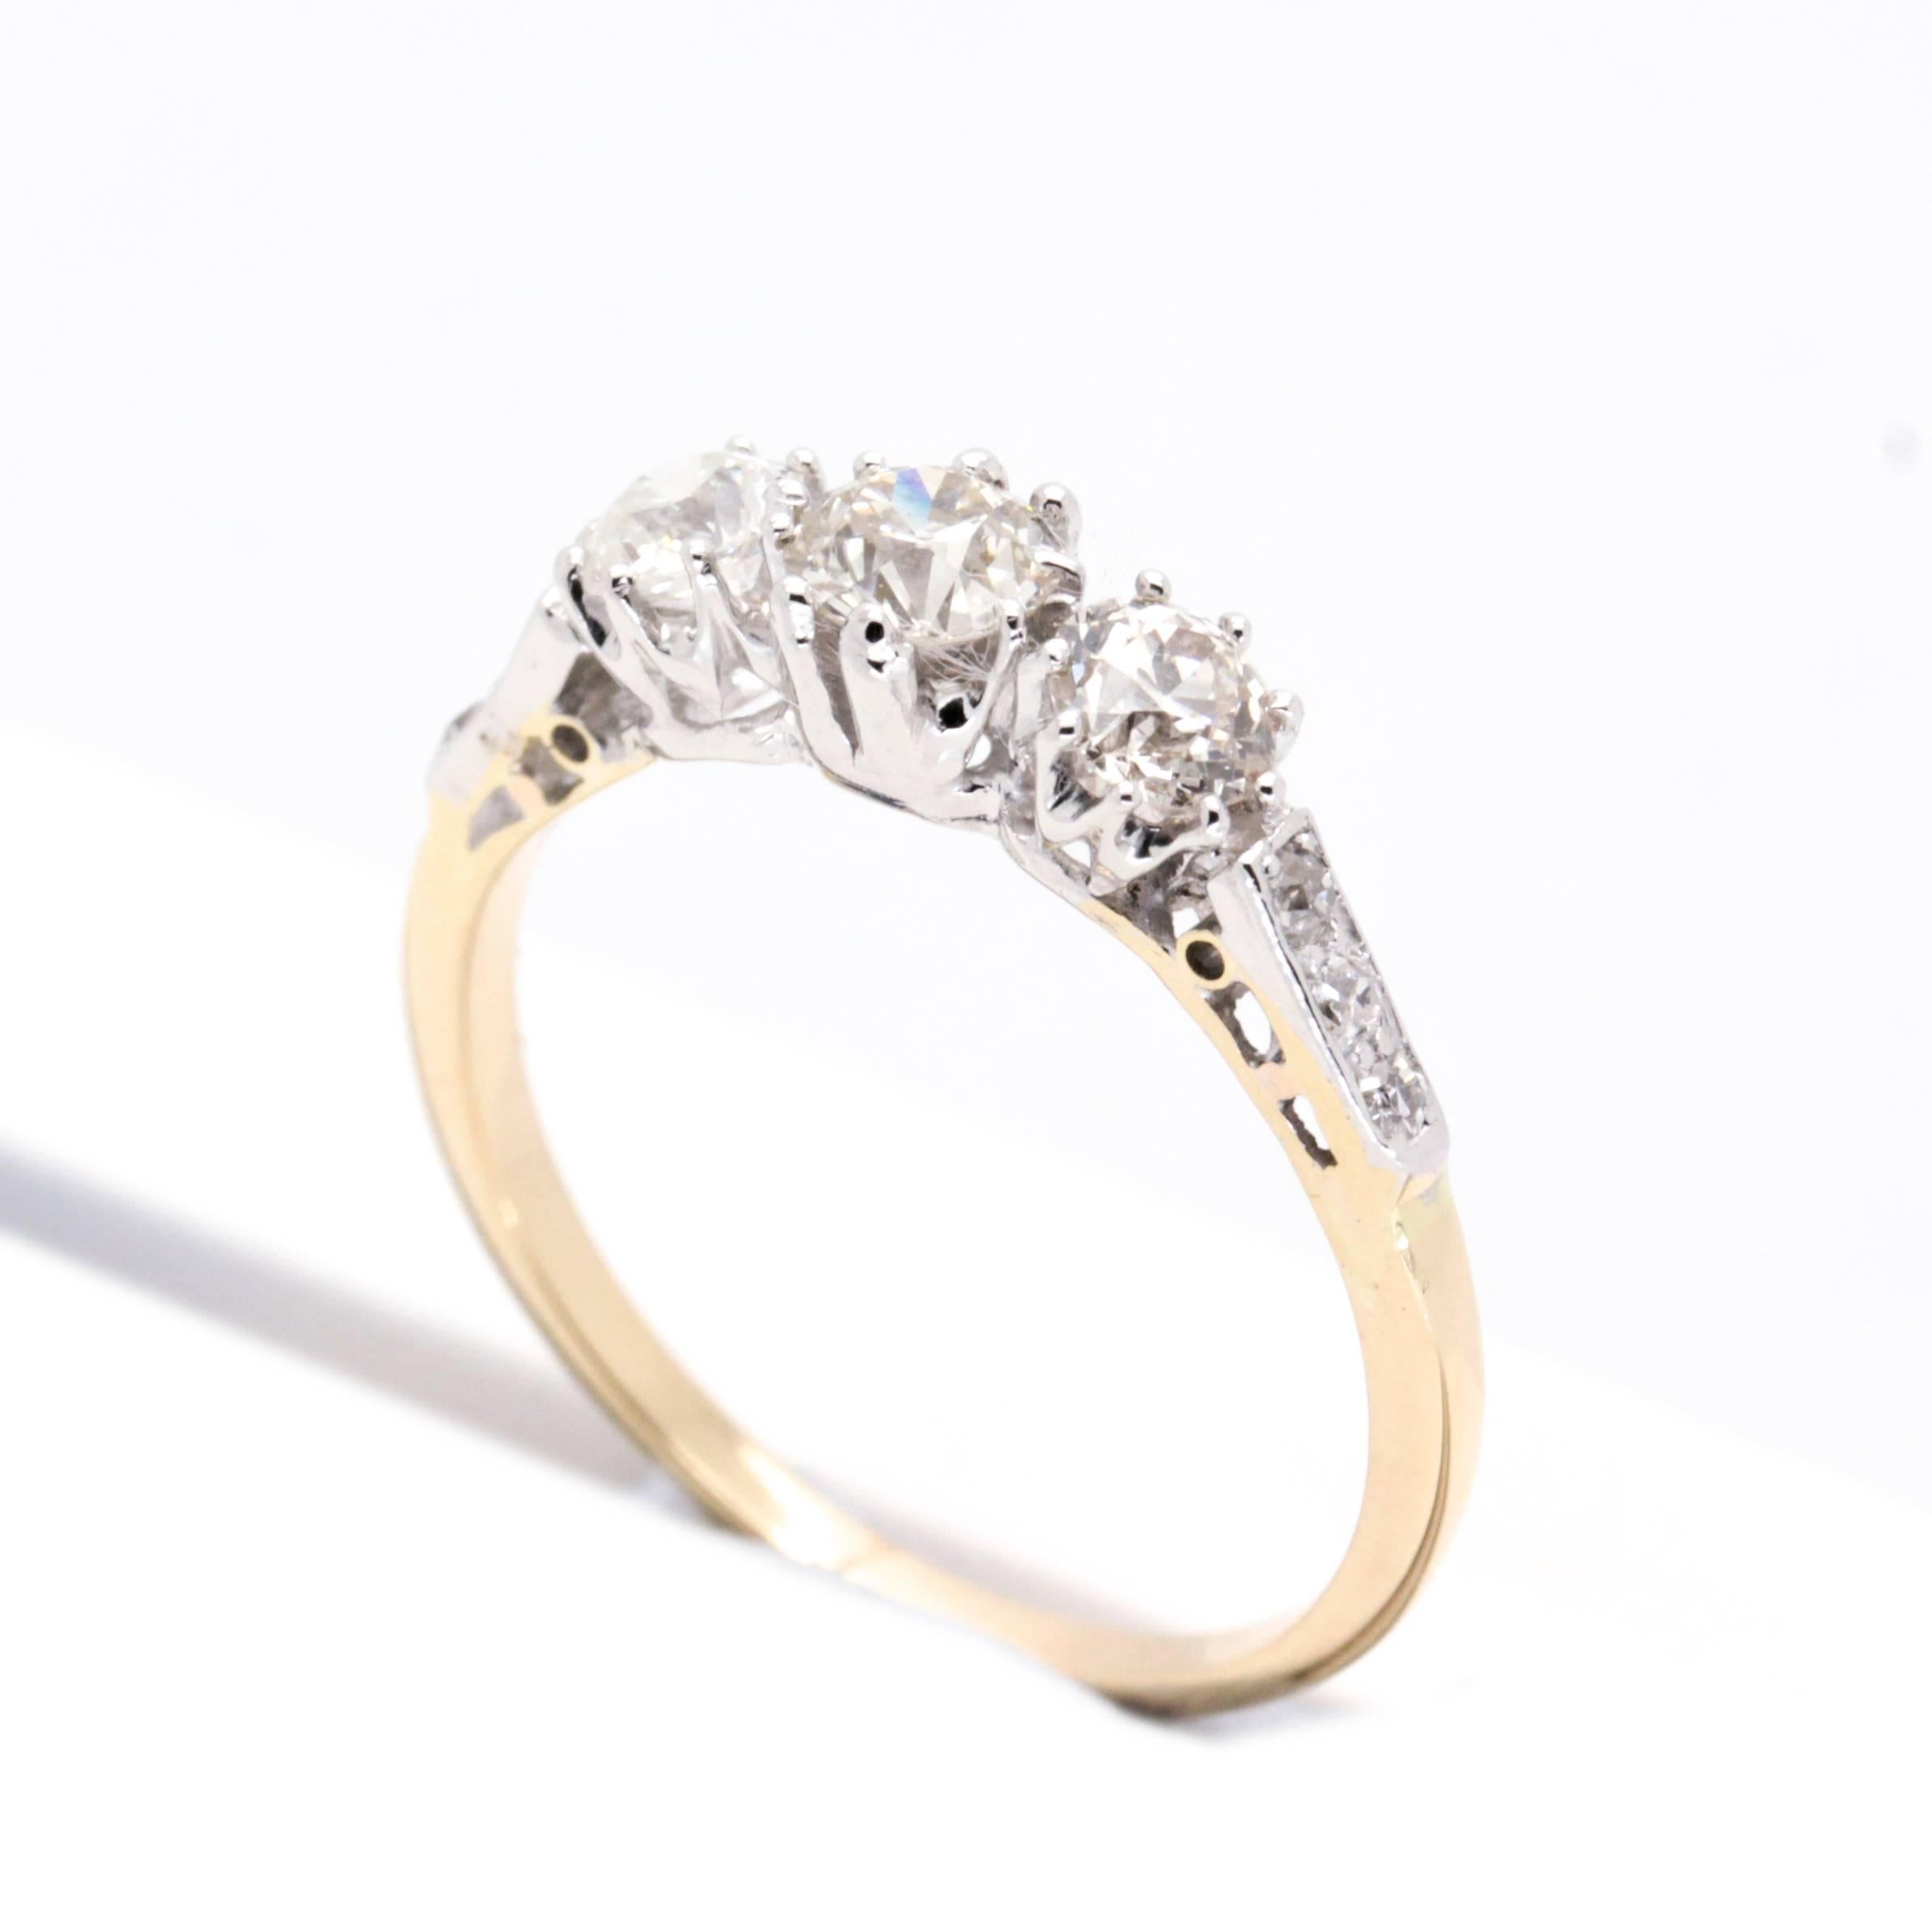 Women's Art Deco Three-Diamond Engagement or Cocktail Ring